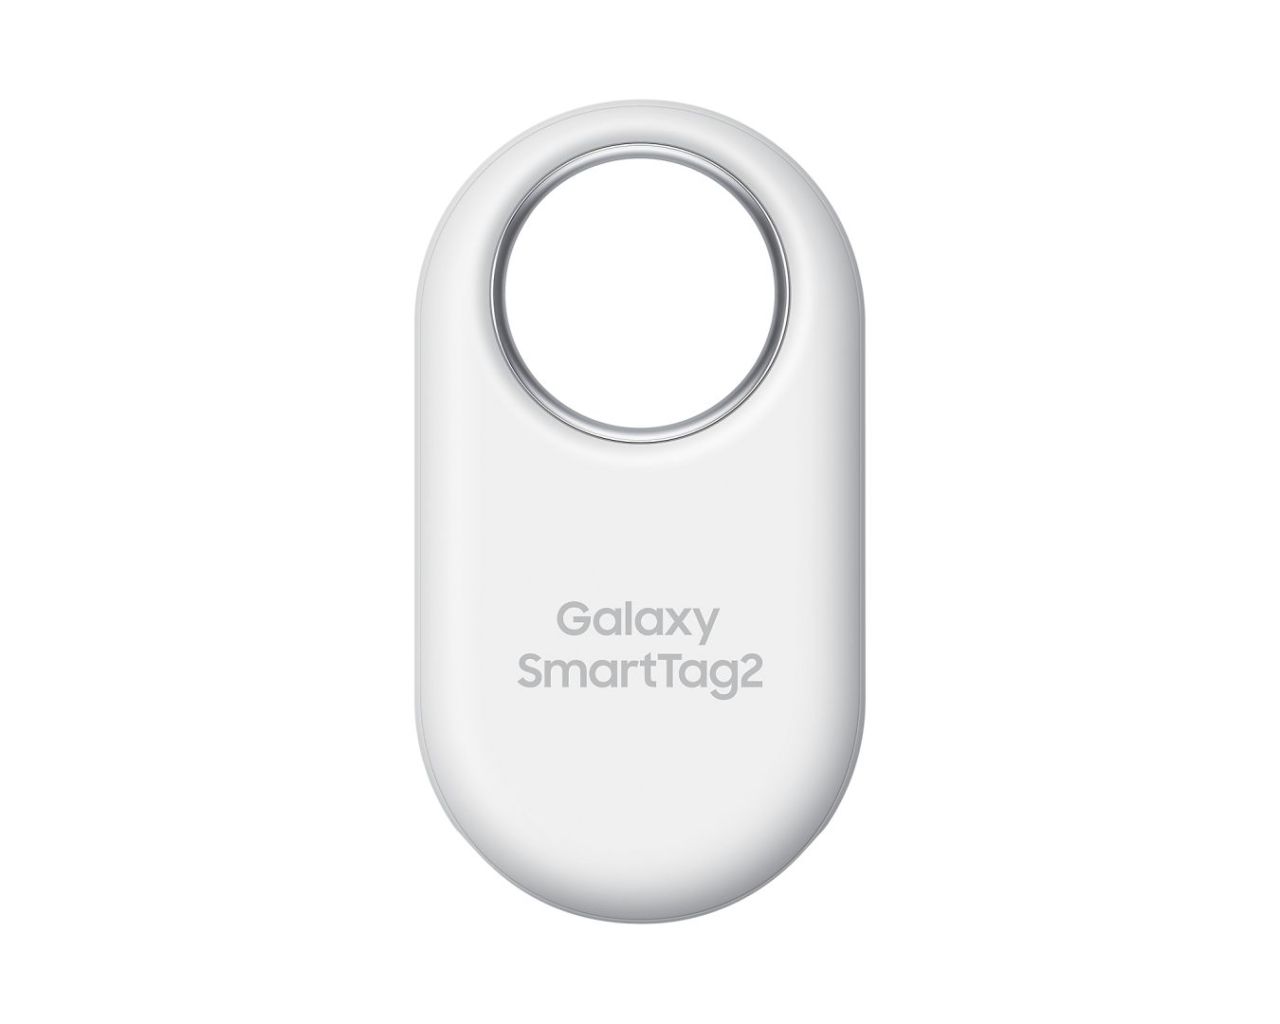 Samsung Galaxy SmartTag2 Black/White (4db)